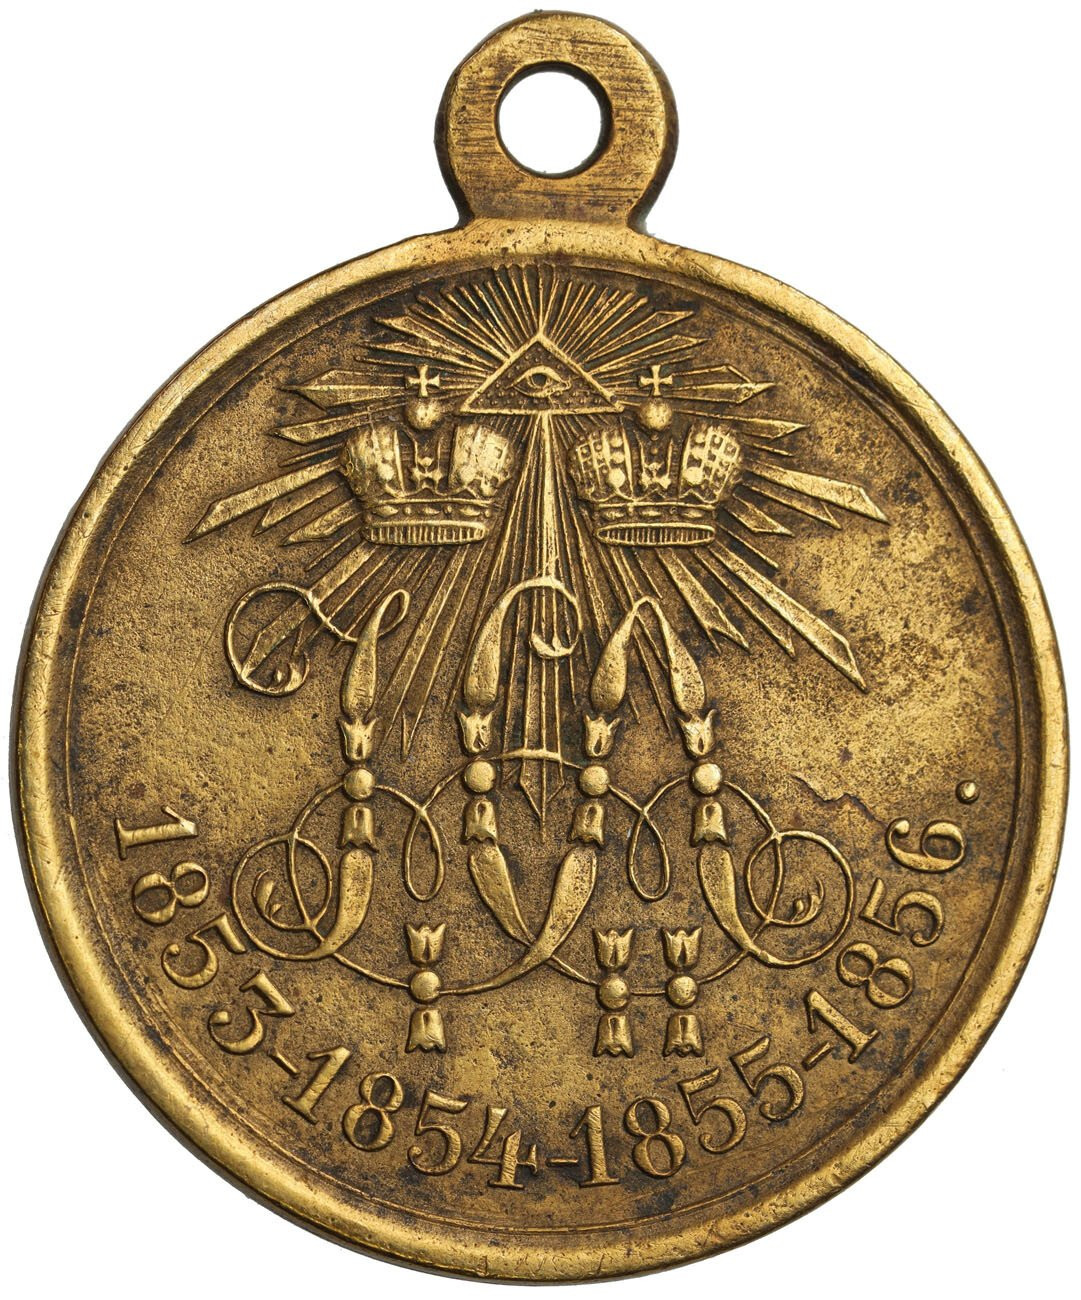 Rosja. Aleksander II. Medal za wojnę krymską 1853-1856, brąz